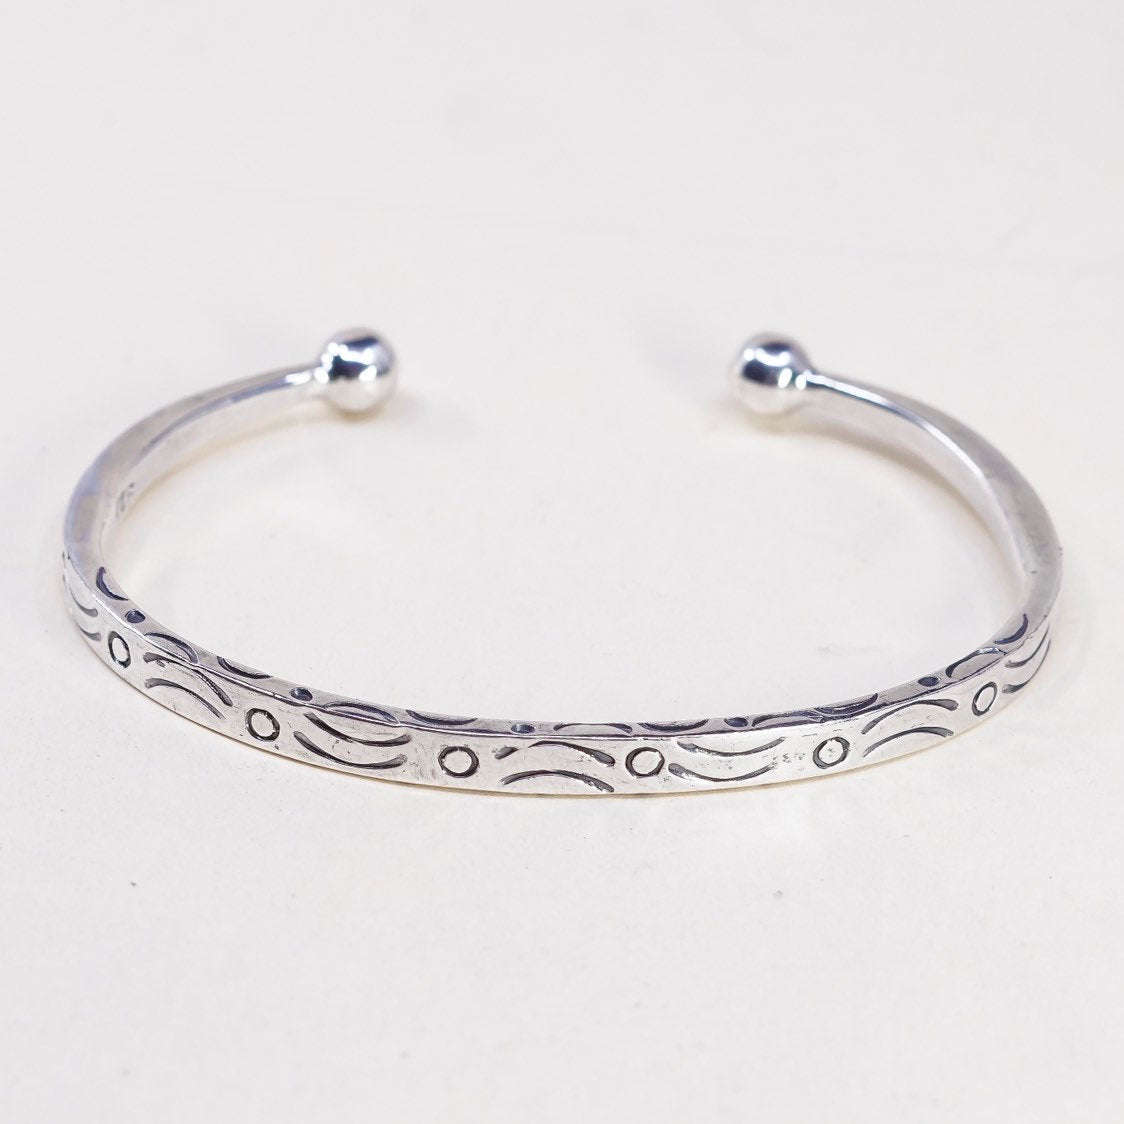 6.75", VTG Sterling silver handmade bracelet, 925 cuff w/ texture N beads end